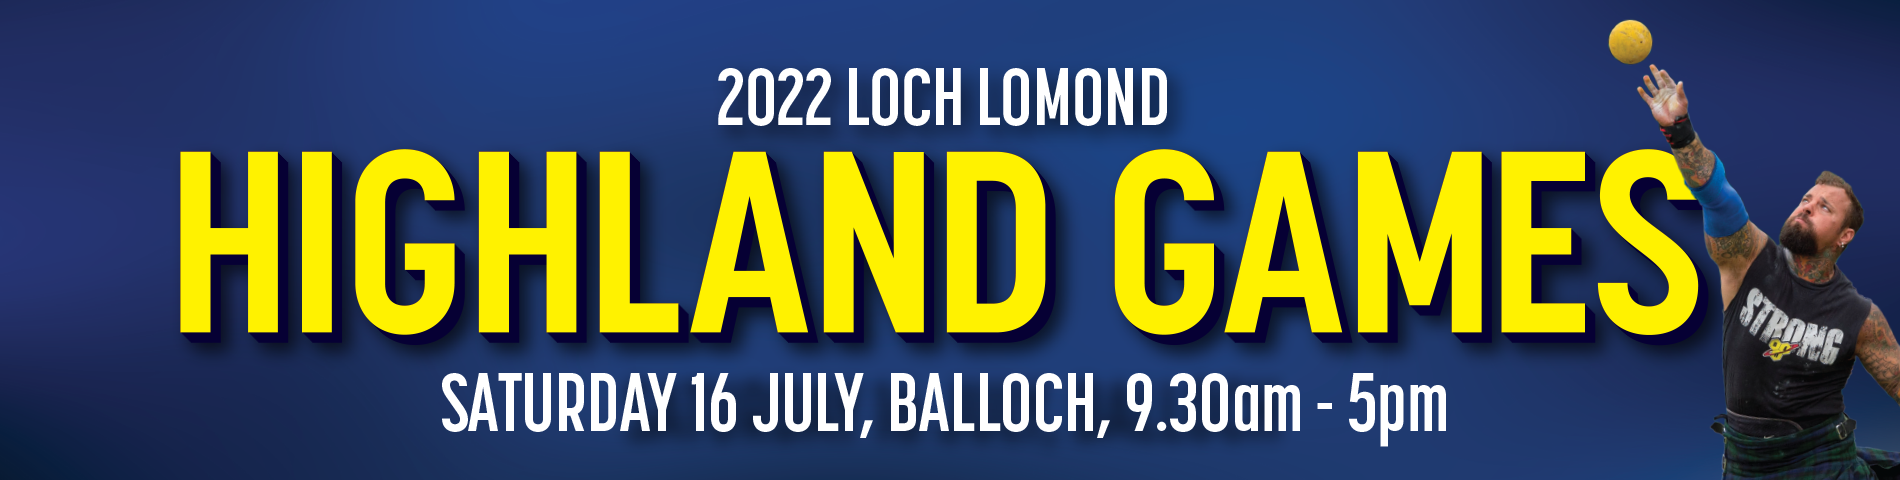 2022 Loch Lomond Highland Games - Saturday 16 July, Balloch 9:30am - 5pm